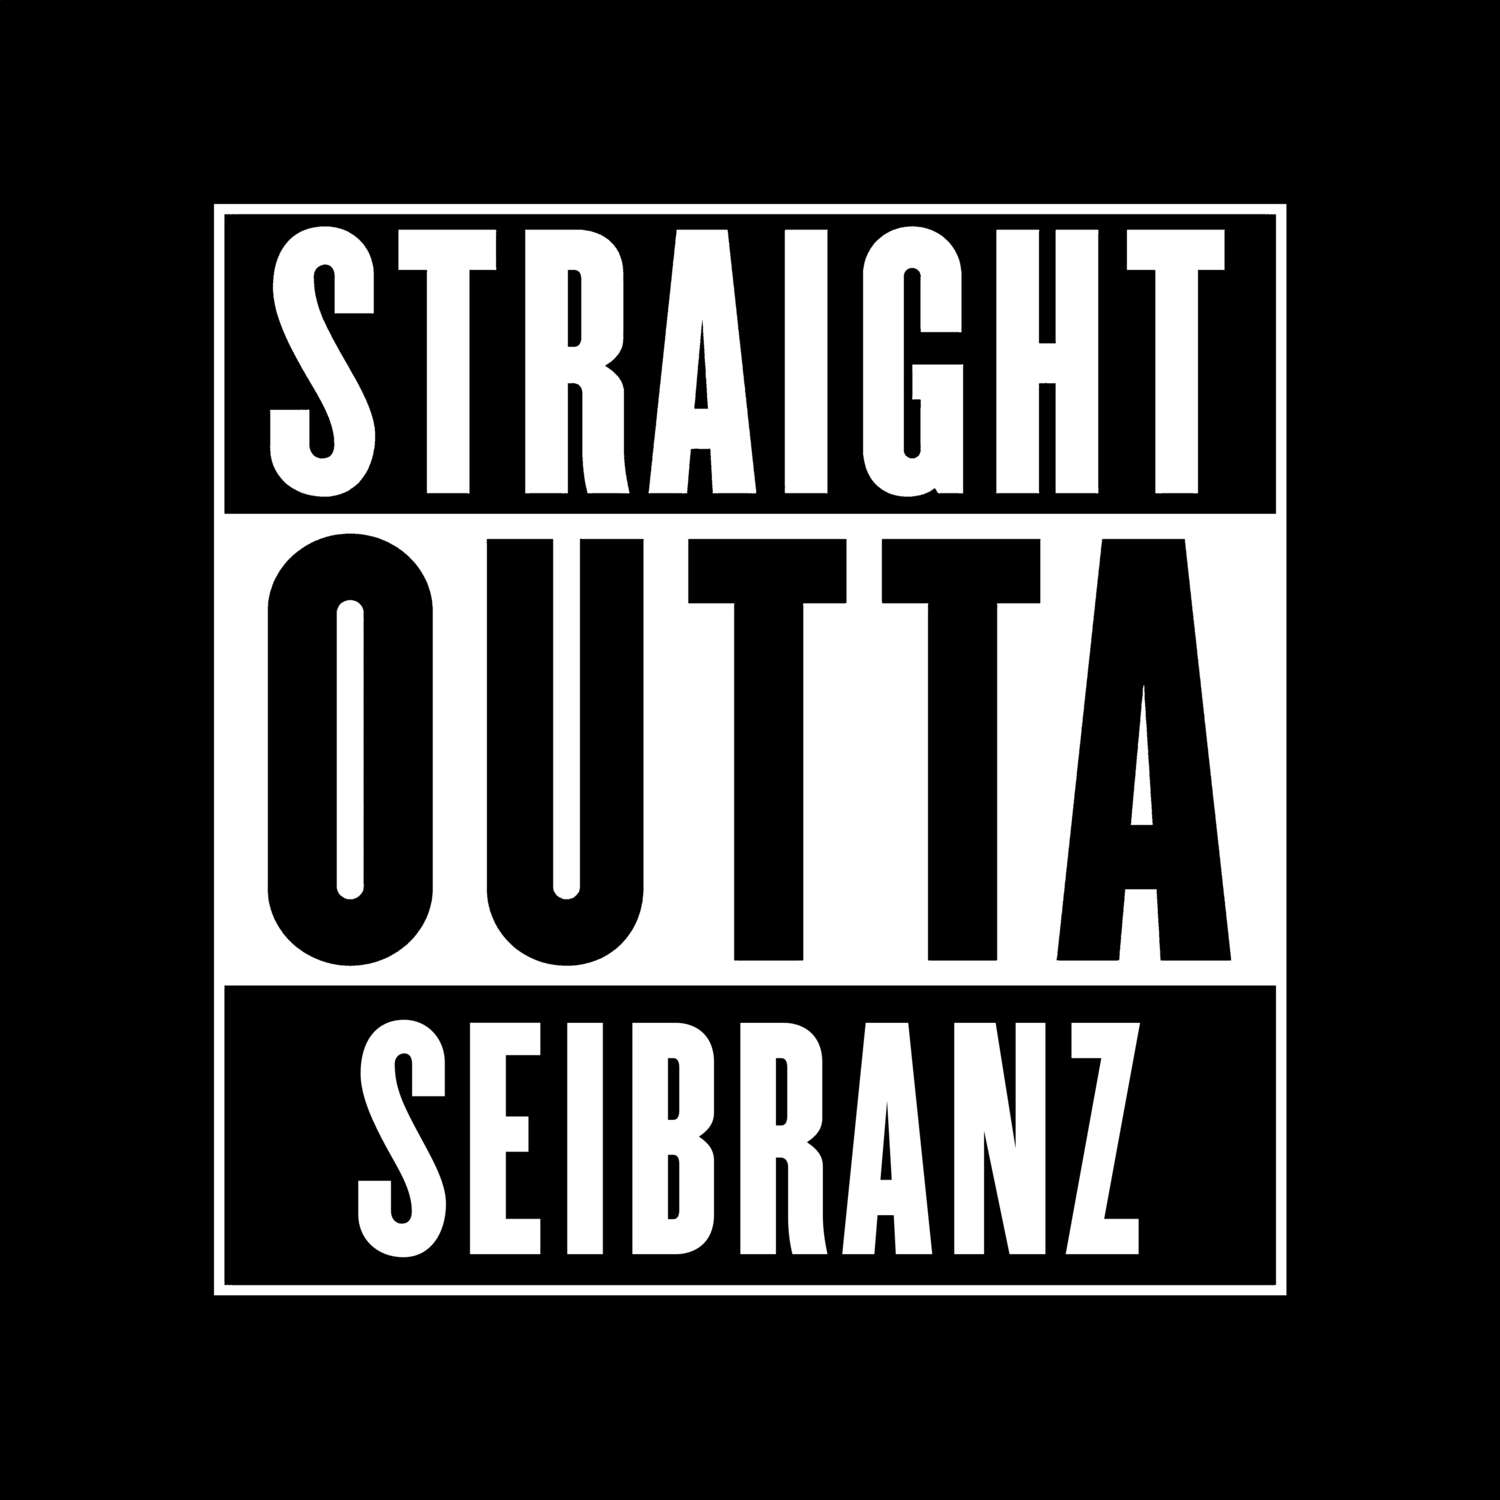 Seibranz T-Shirt »Straight Outta«